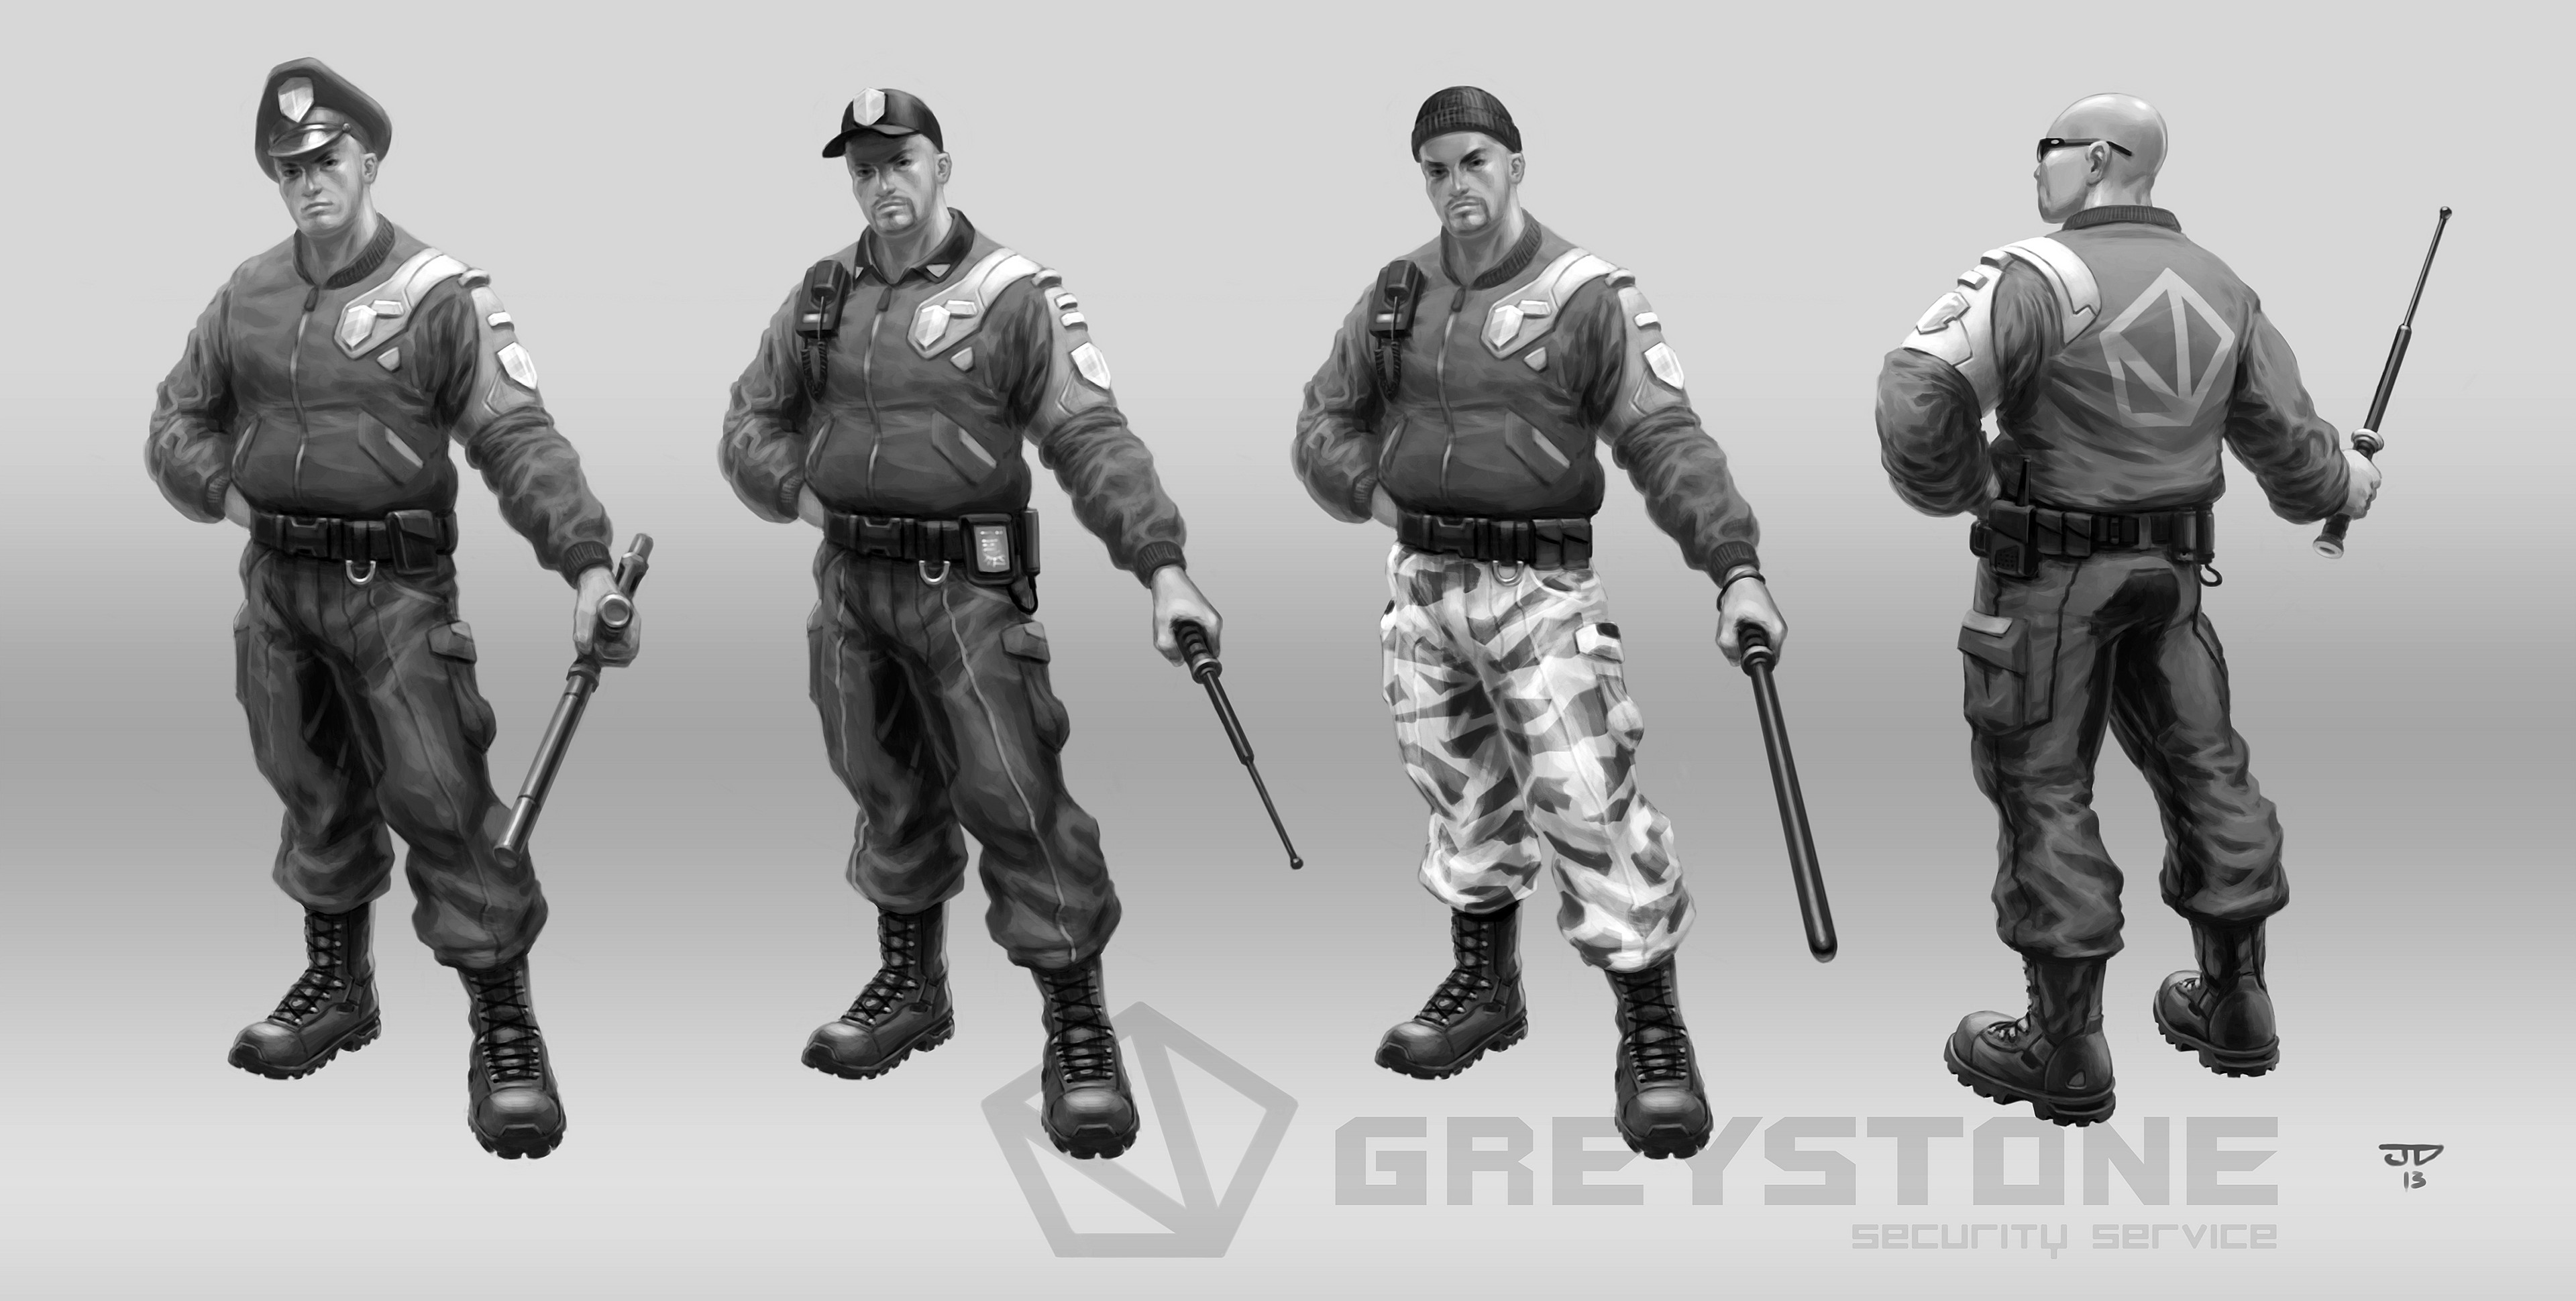 Greystone Guards